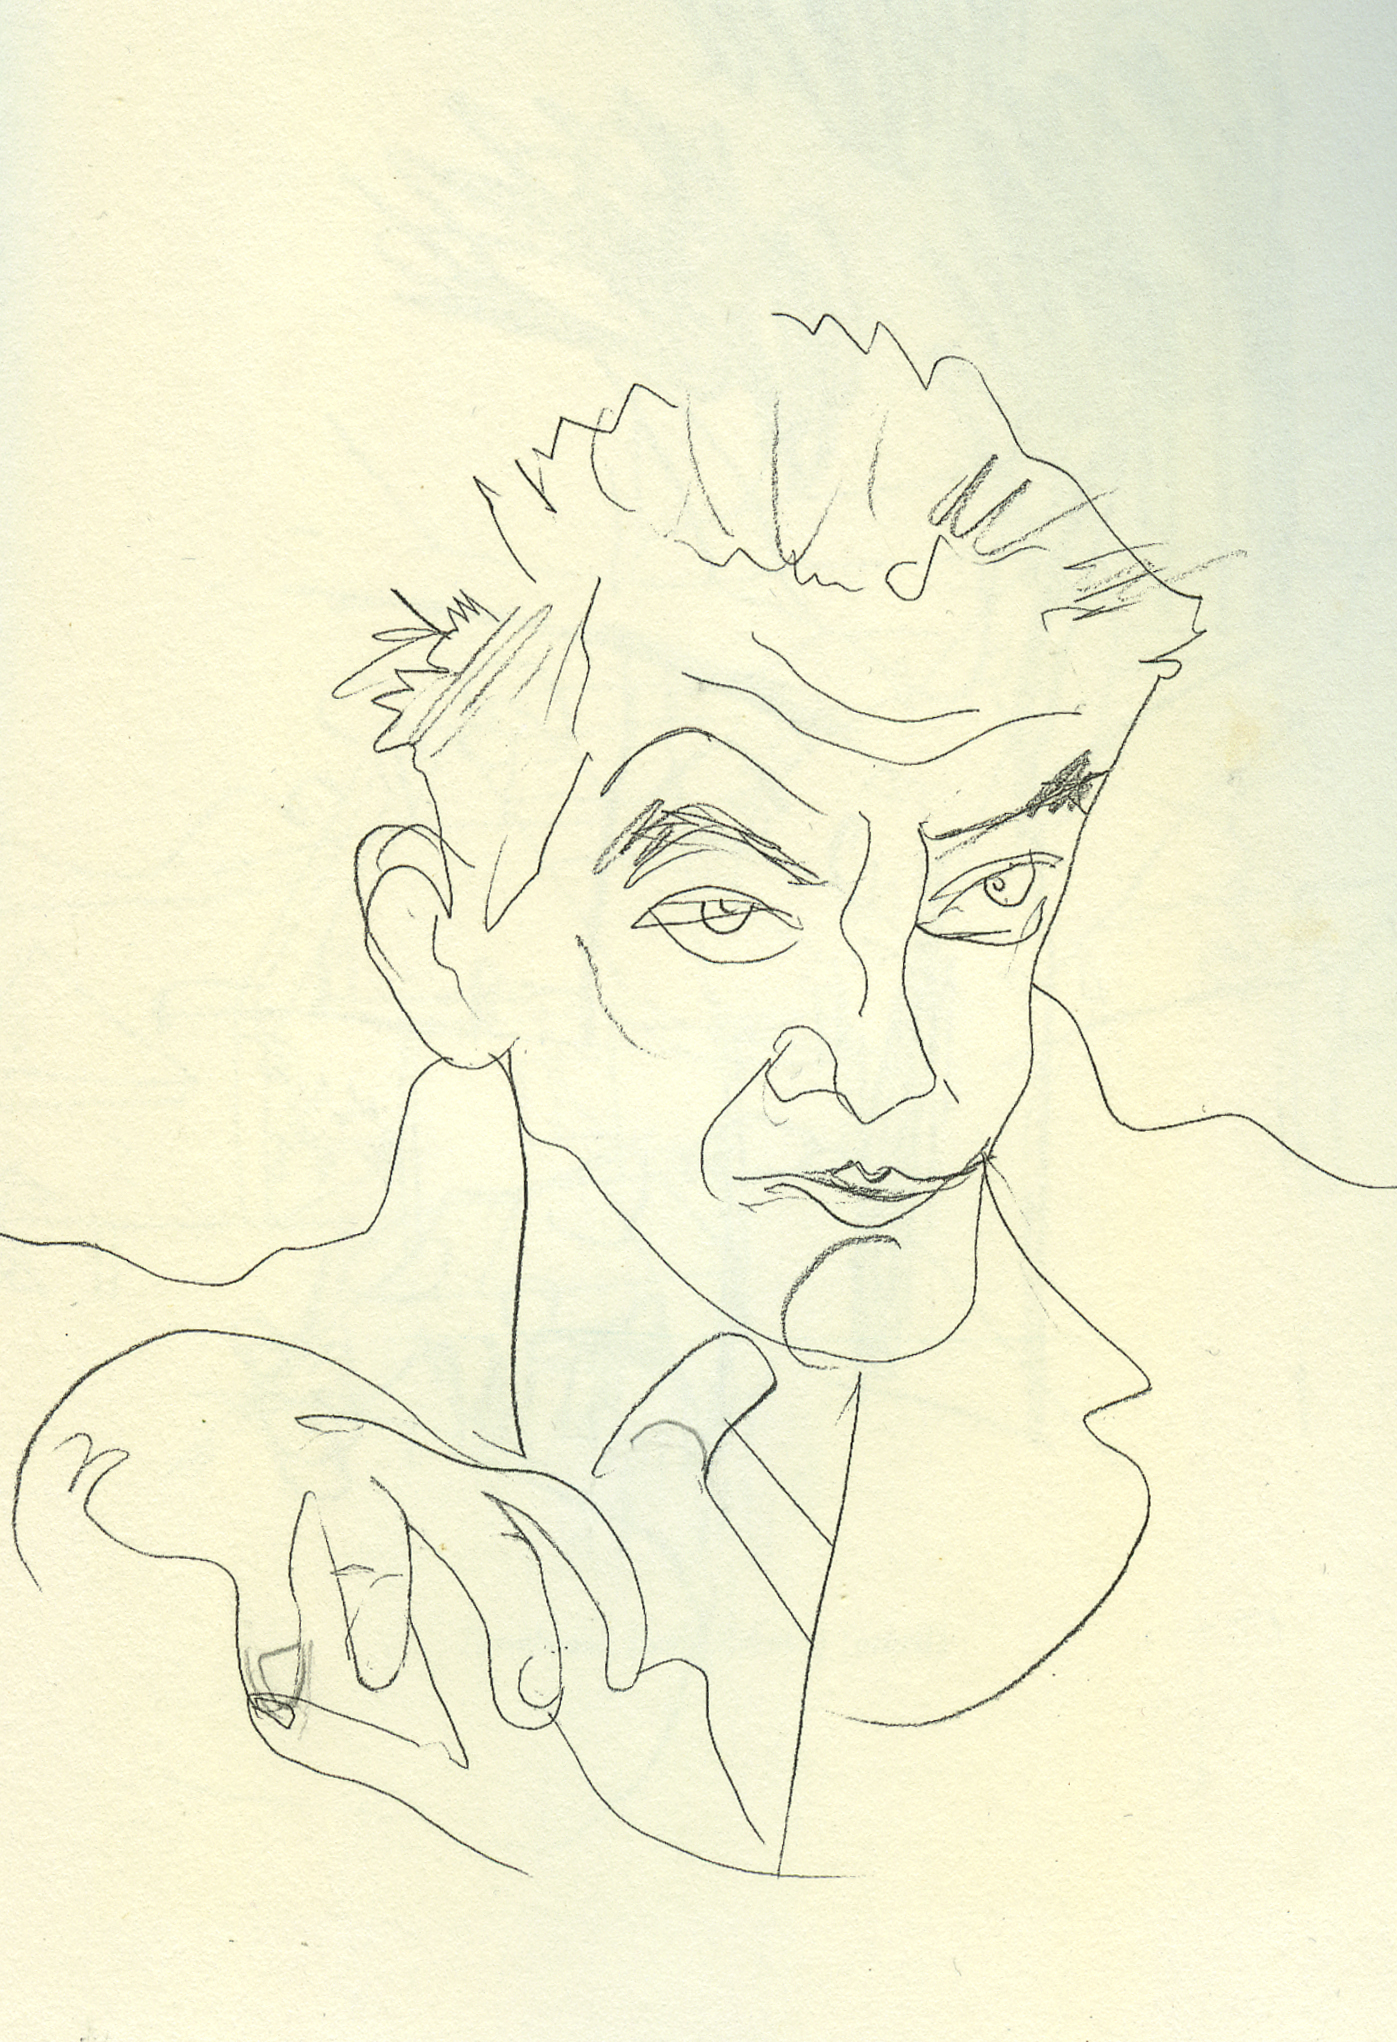 Homage to Egcon Schiele, pencil